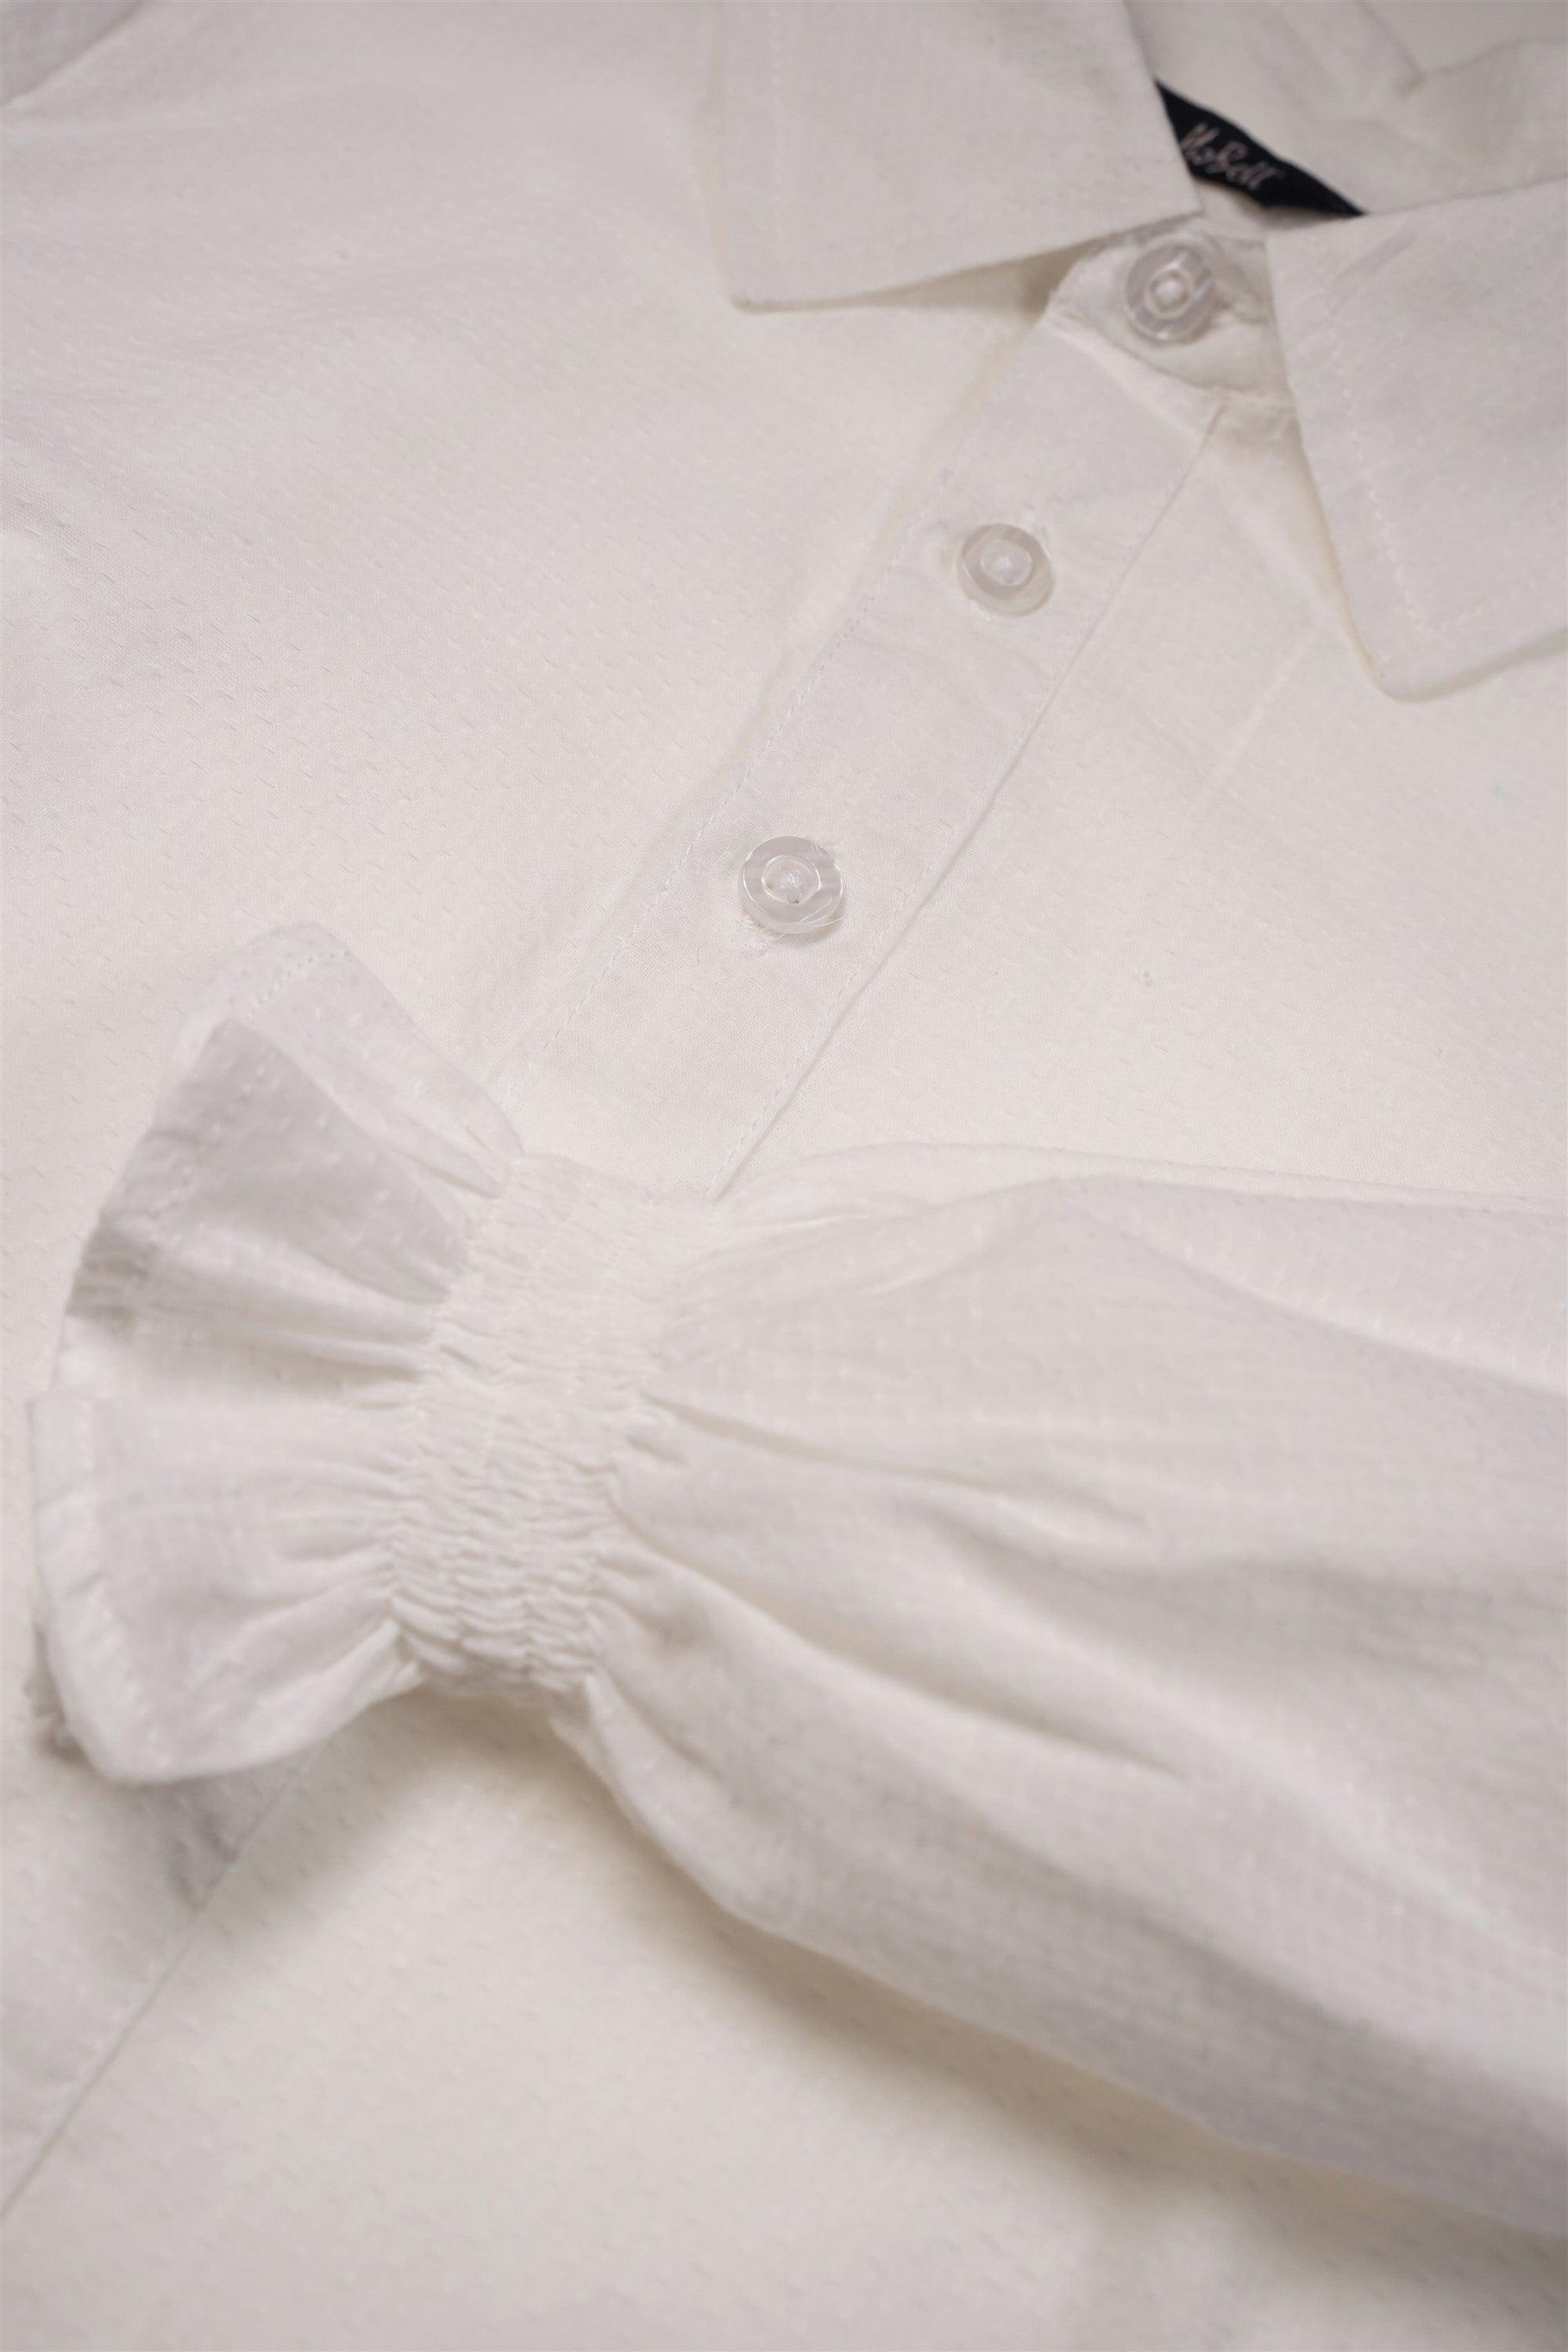 Tipi Longsleeve Cotton Blouse - NoNo Kidswear